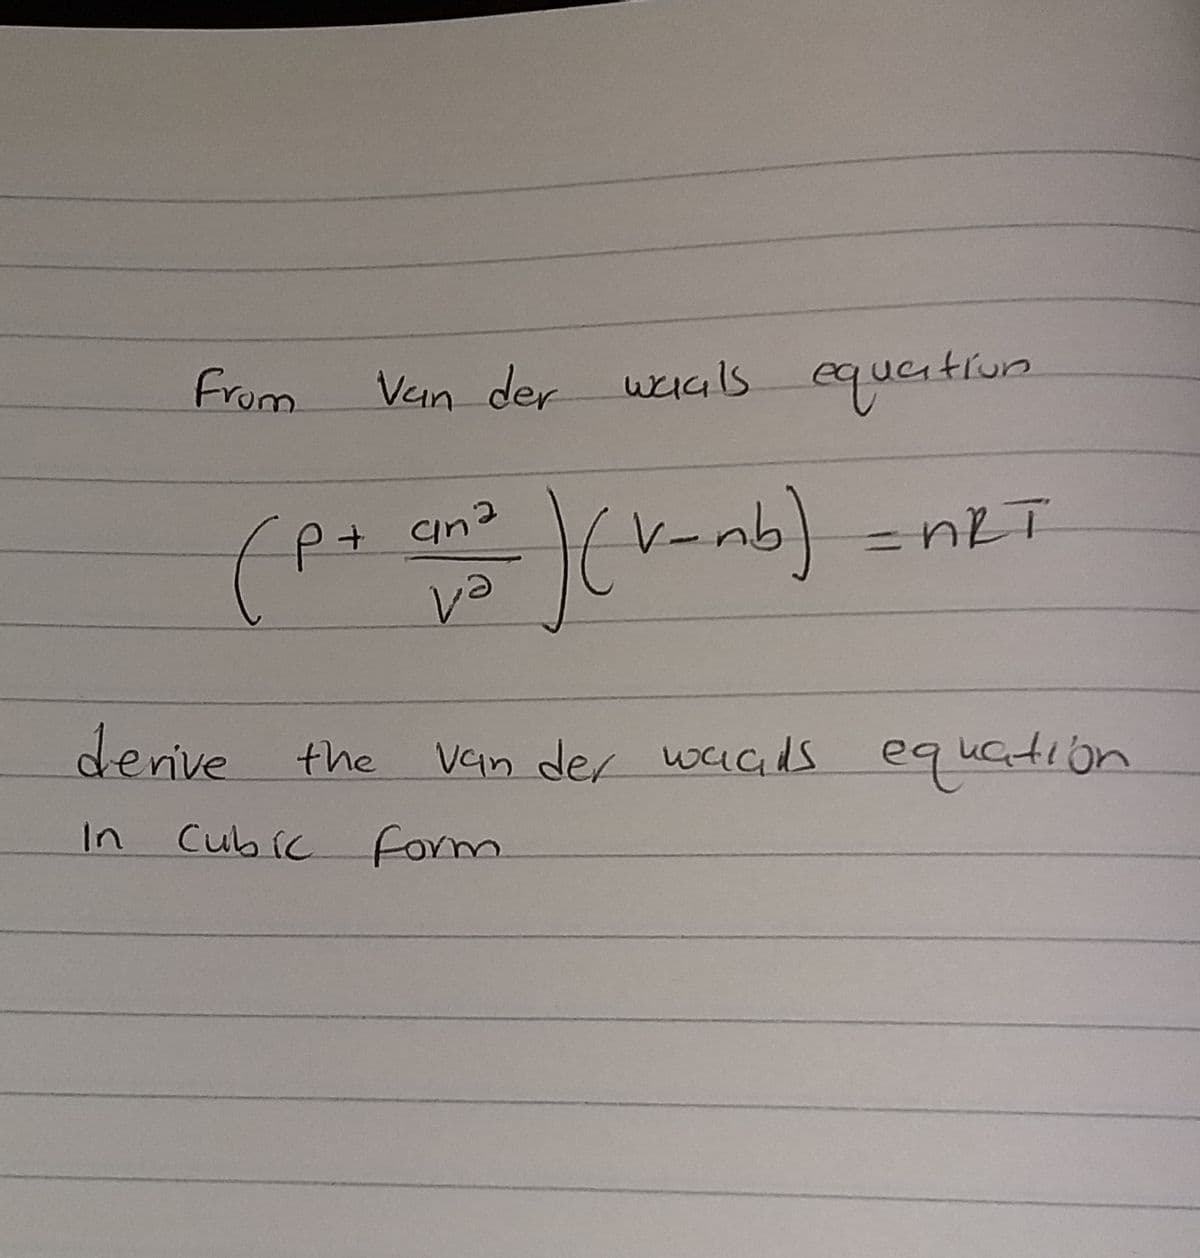 From
Vein der wials equeitiun
derive the
Van der uoucils equation
In
Cub ic form
